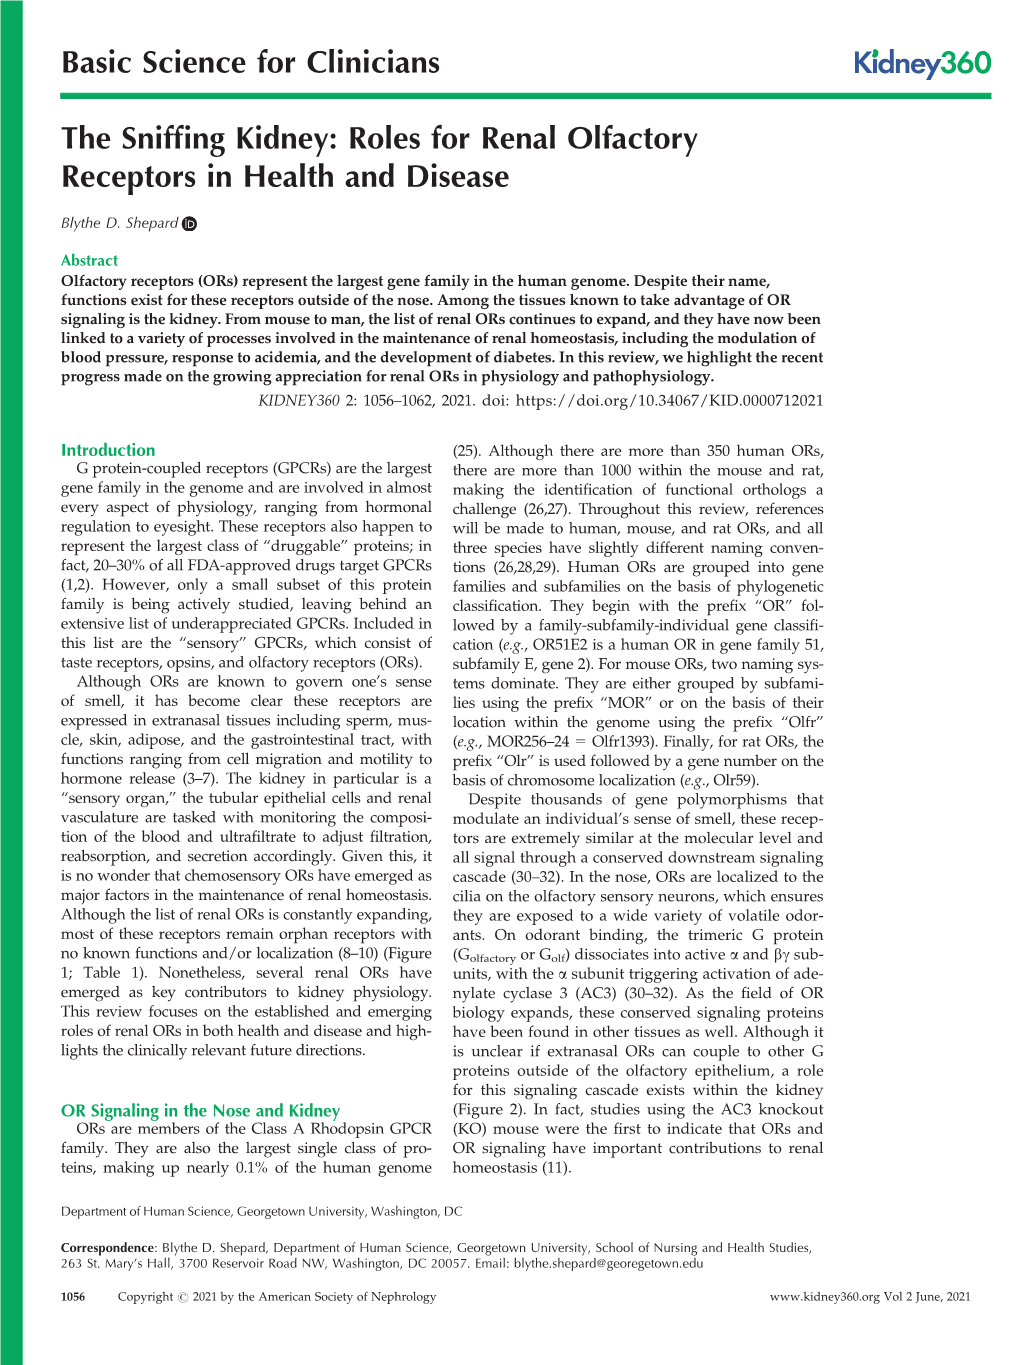 Roles for Renal Olfactory Receptors in Health and Disease